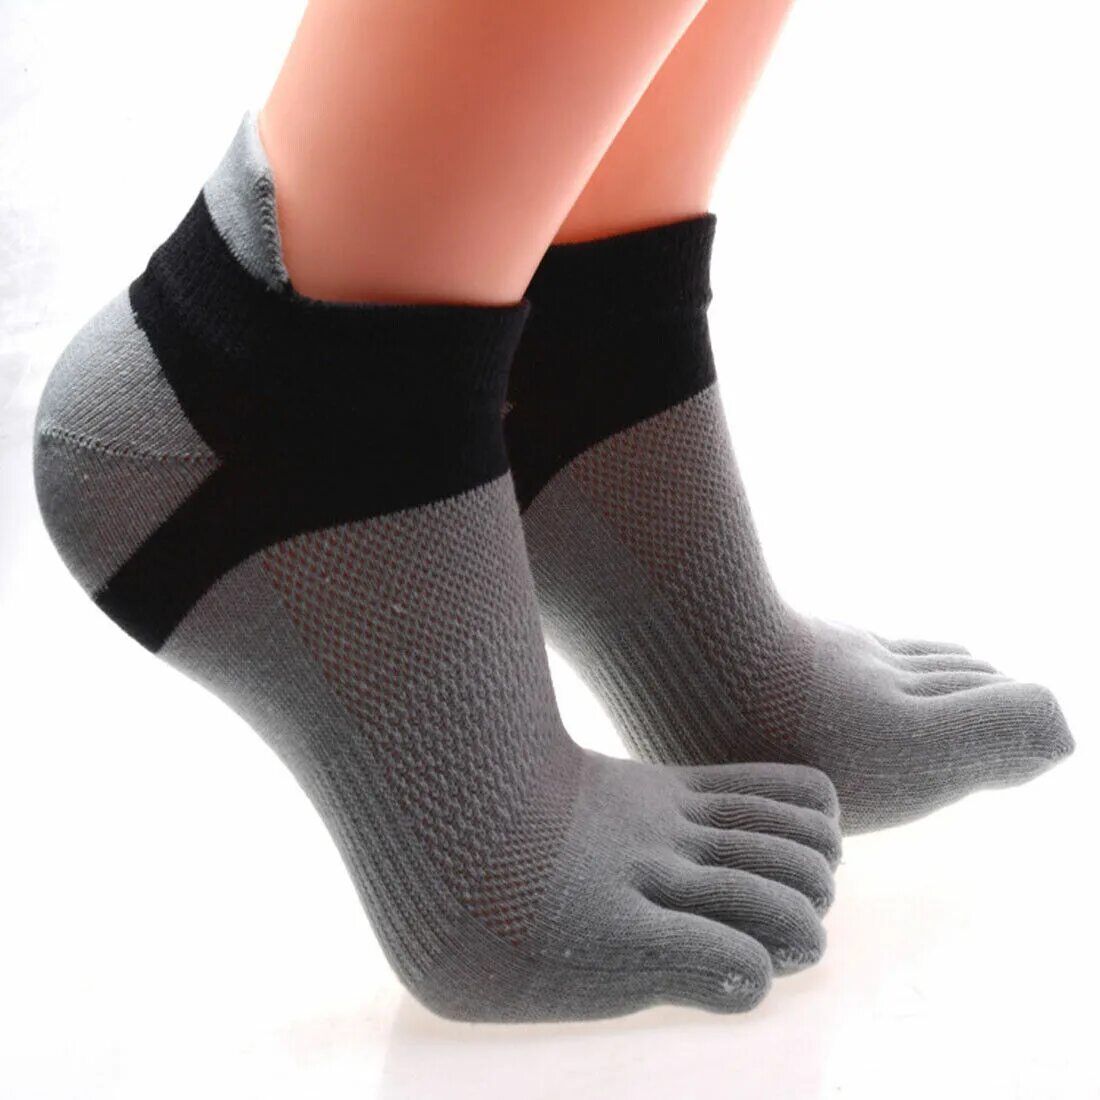 Носки 5 пальцев Спортмастер. Носки с пальцами мужские. Спортивные носки с пальцами. Компрессионные носки с пальцами.